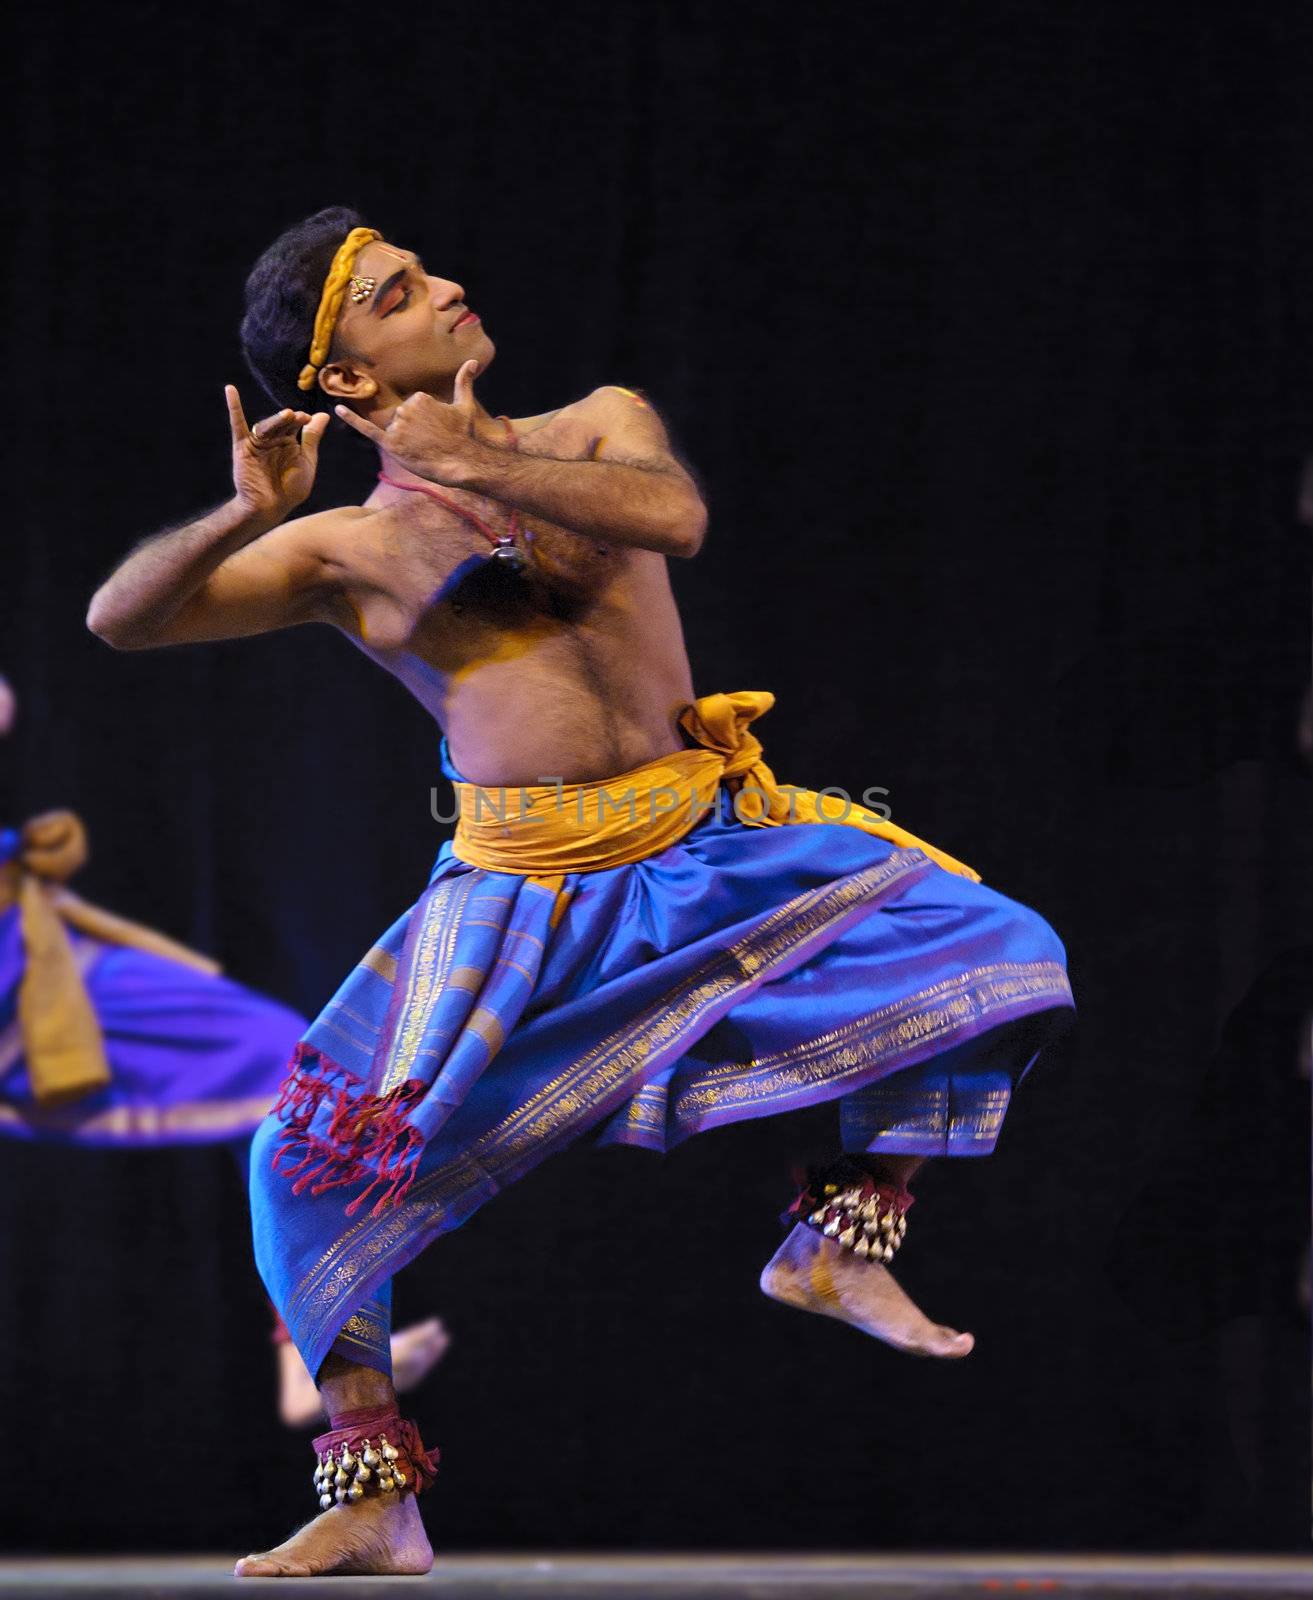 Indian folk dancer by jackq